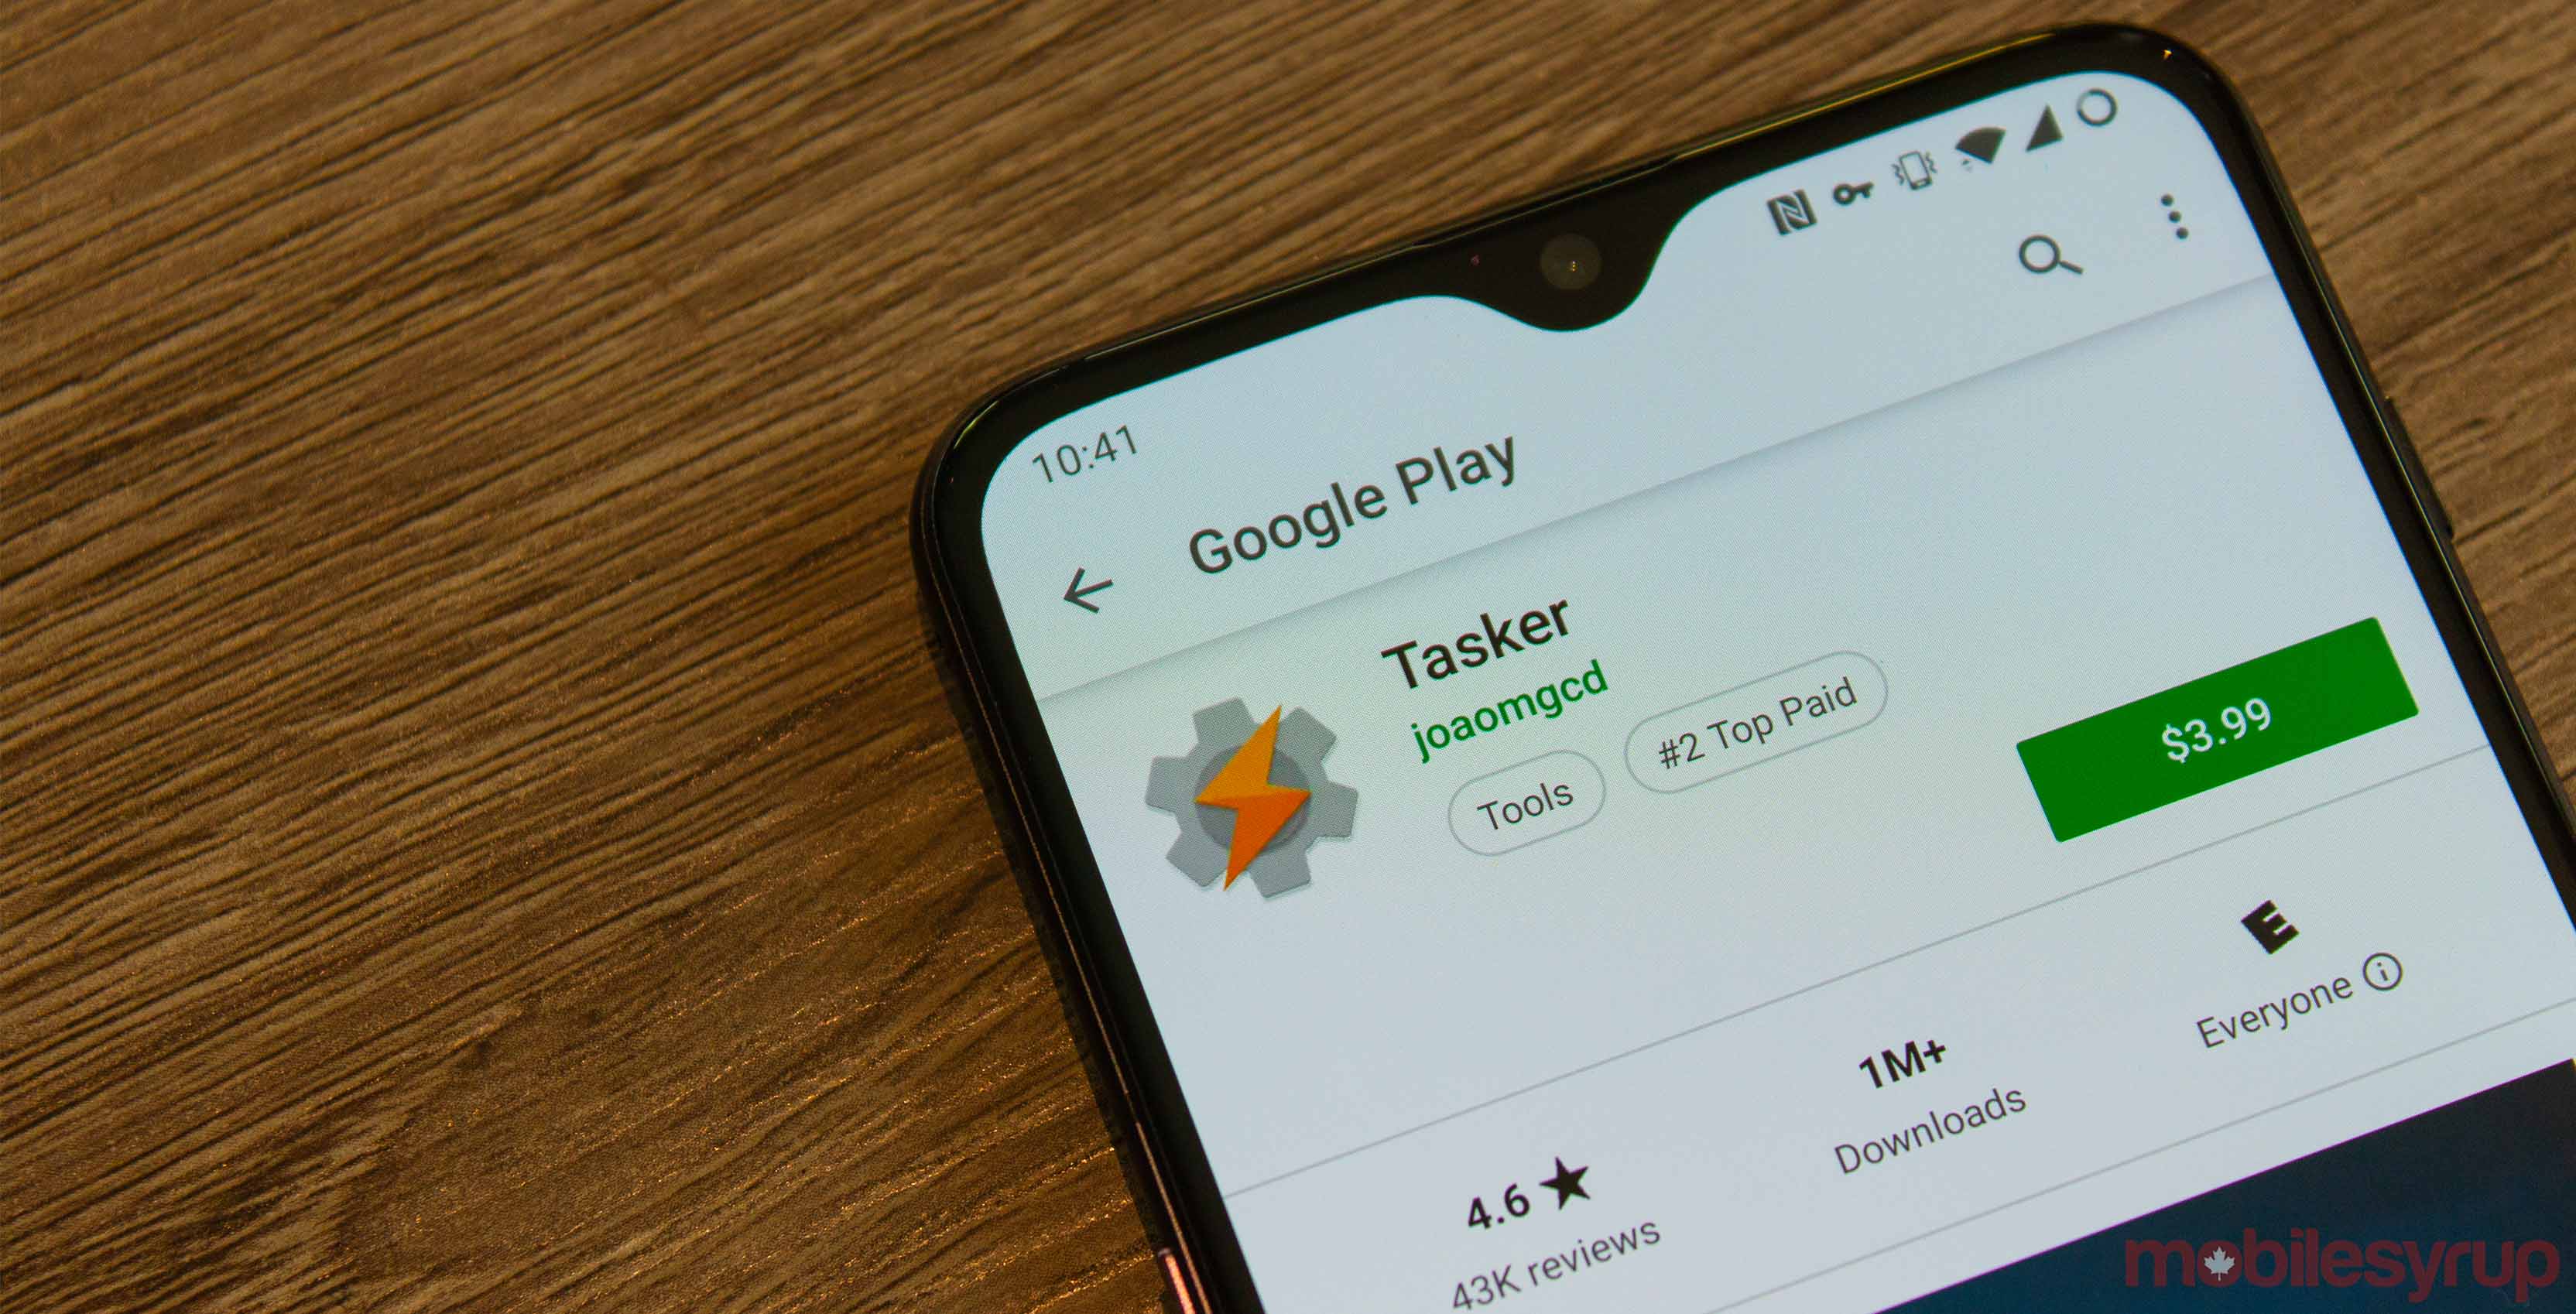 Tasker on Google Play Store